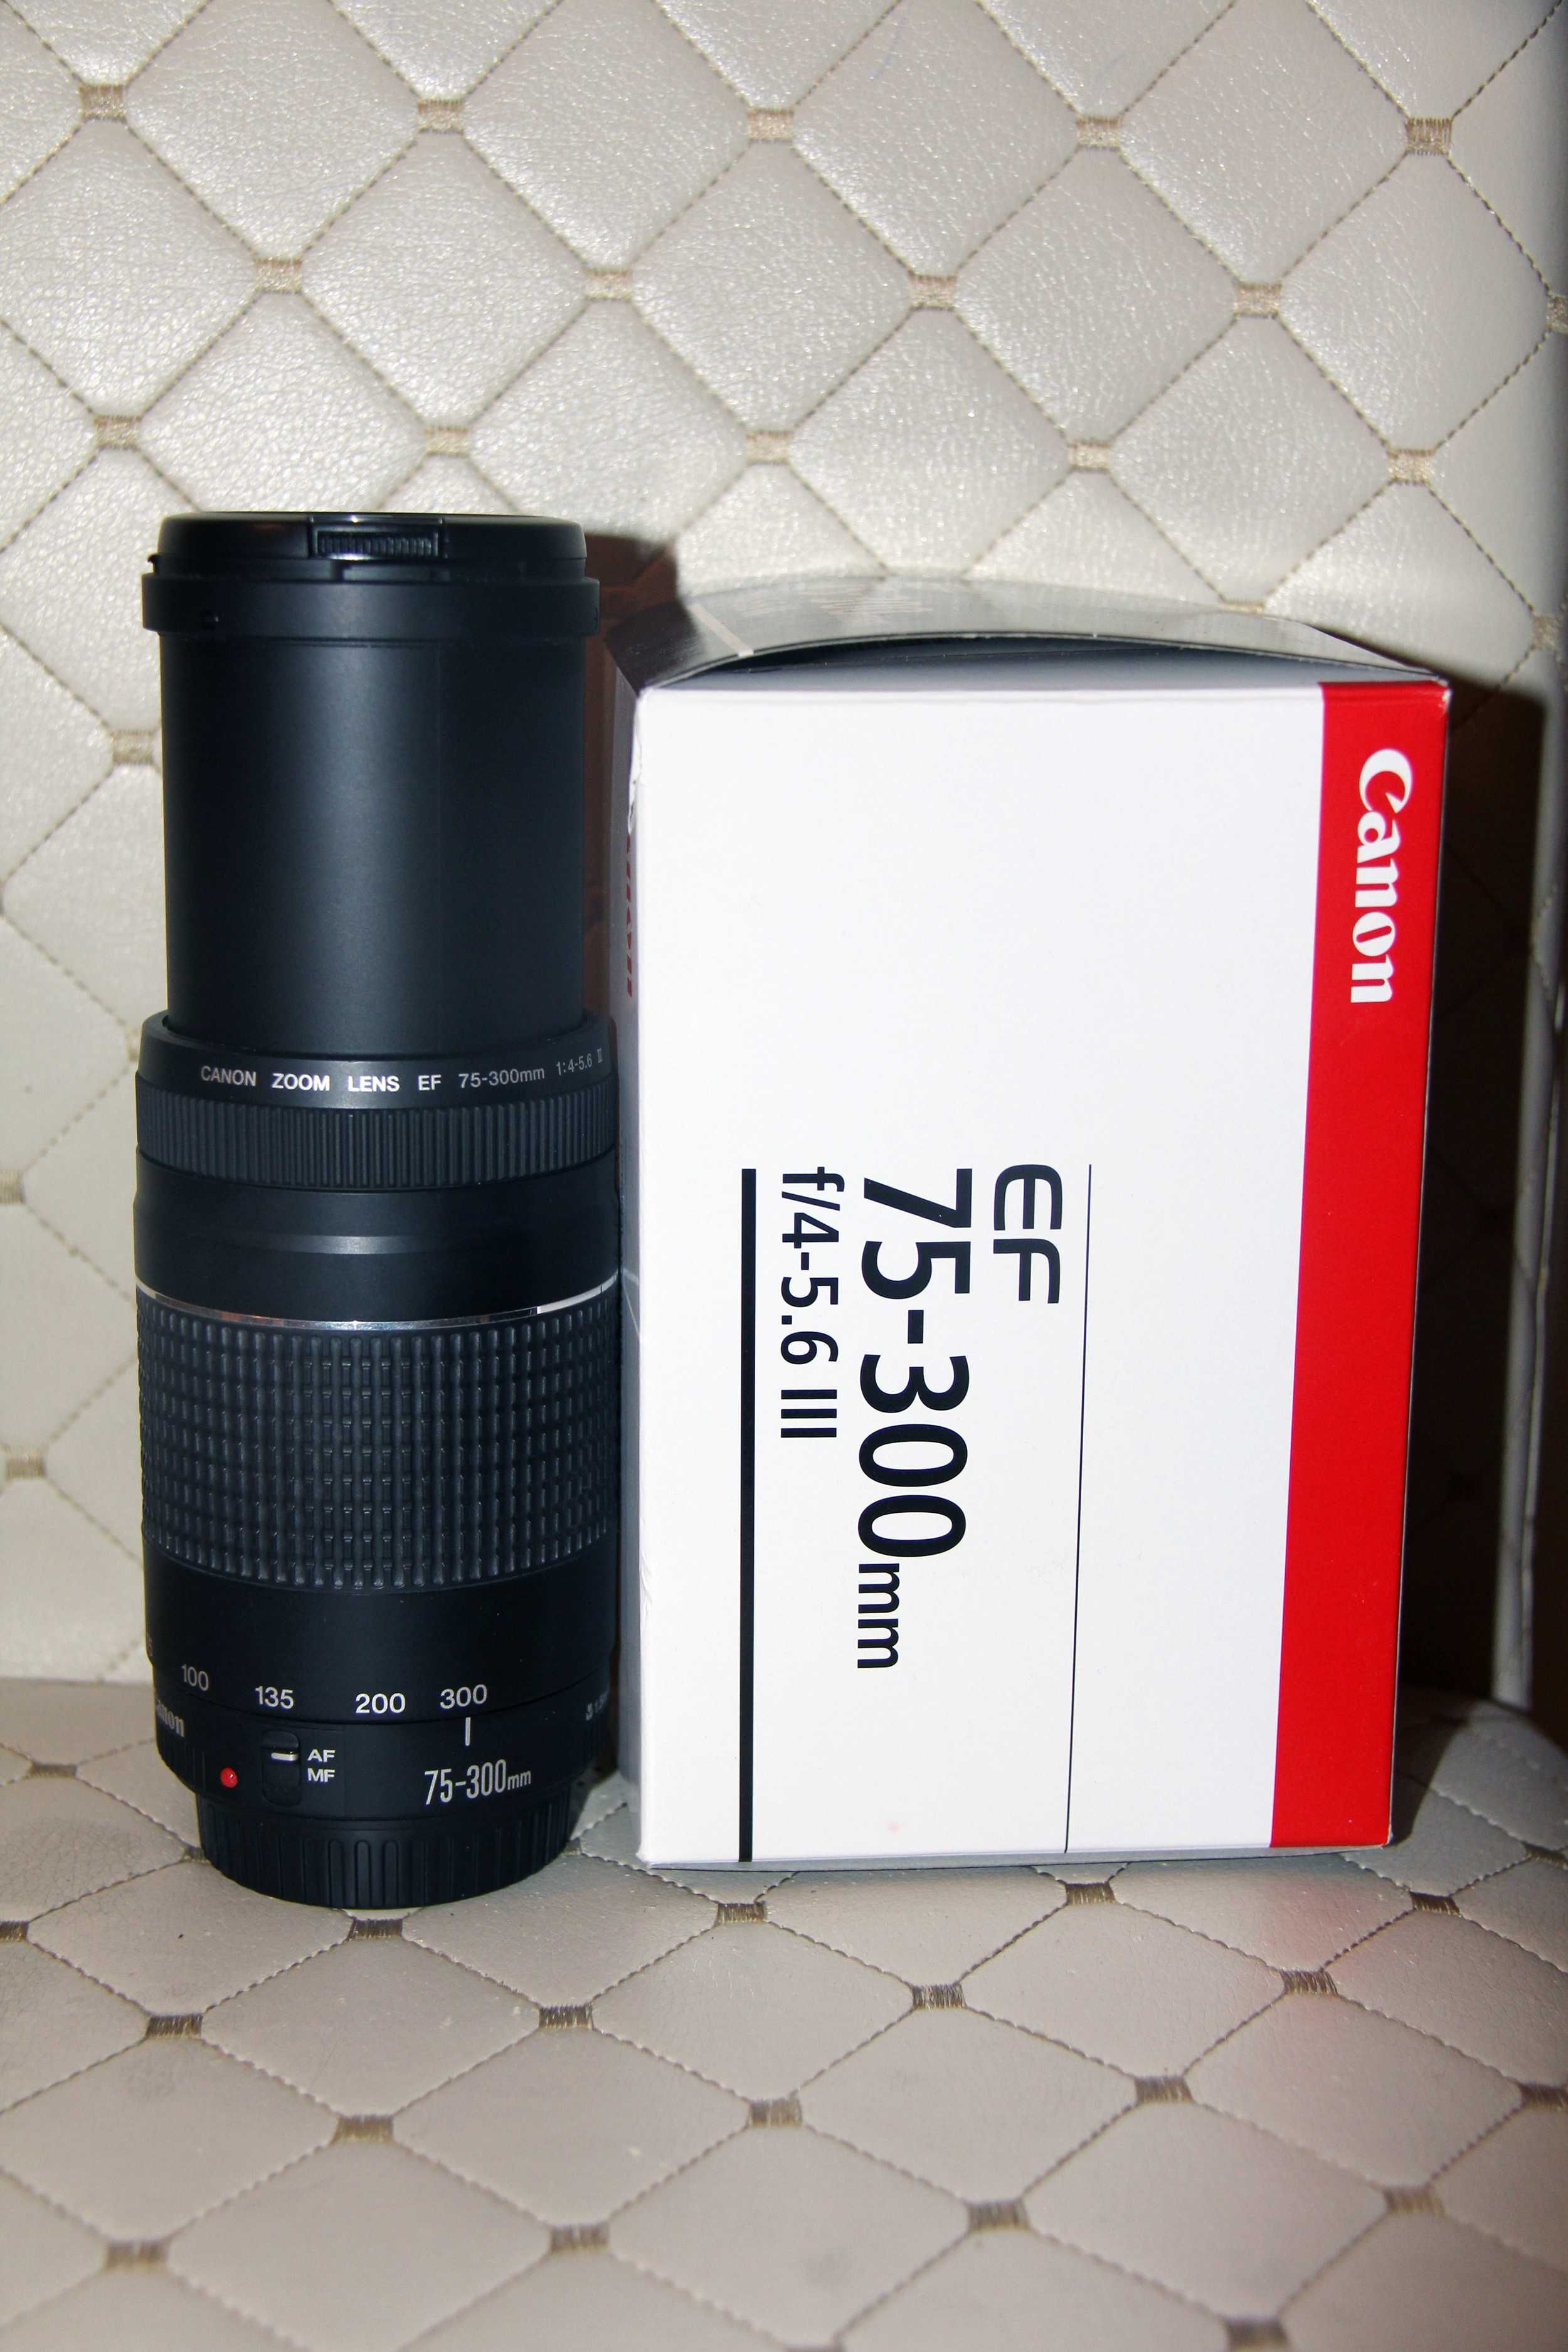 Объектив Canon EF 75-300mm iii. Телевик. Зумовый.